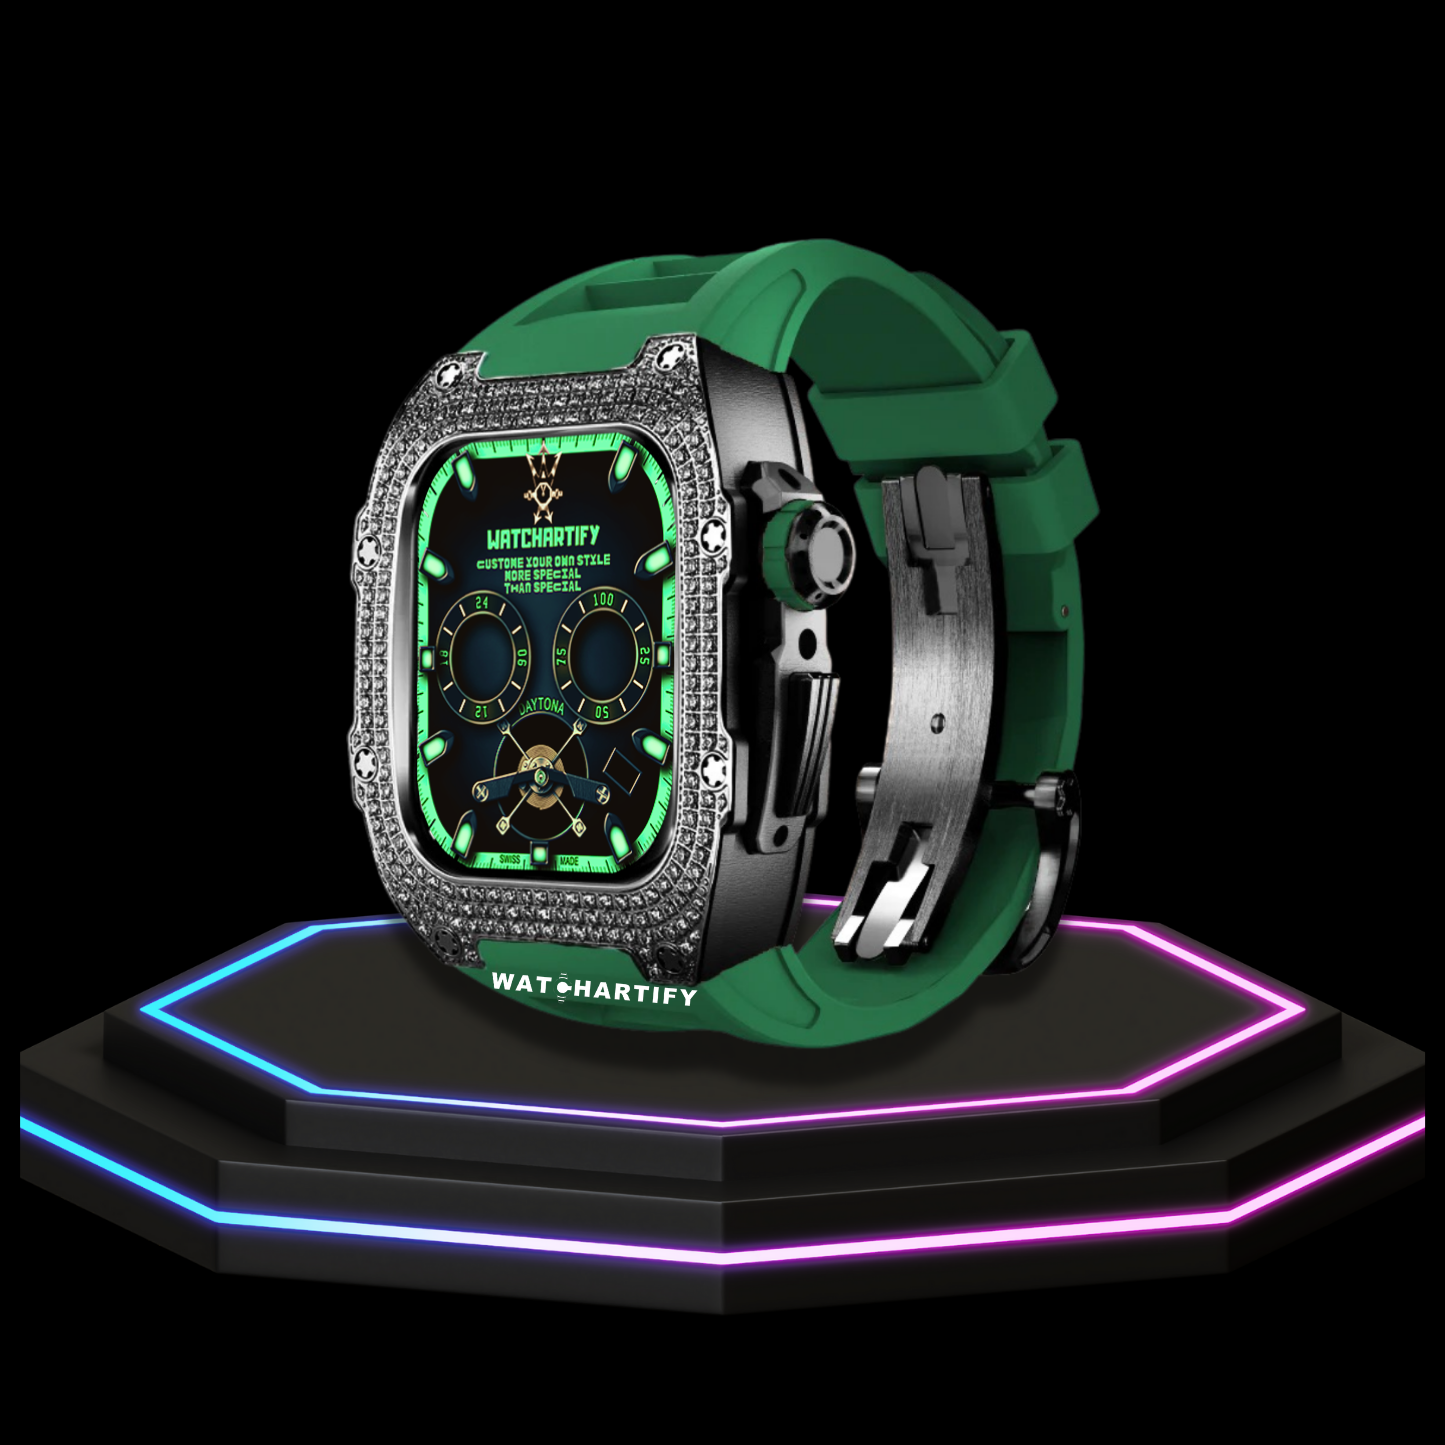 Apple Watch Case 44MM - Crystal TITAN Series Dark | Grass Green Rubber